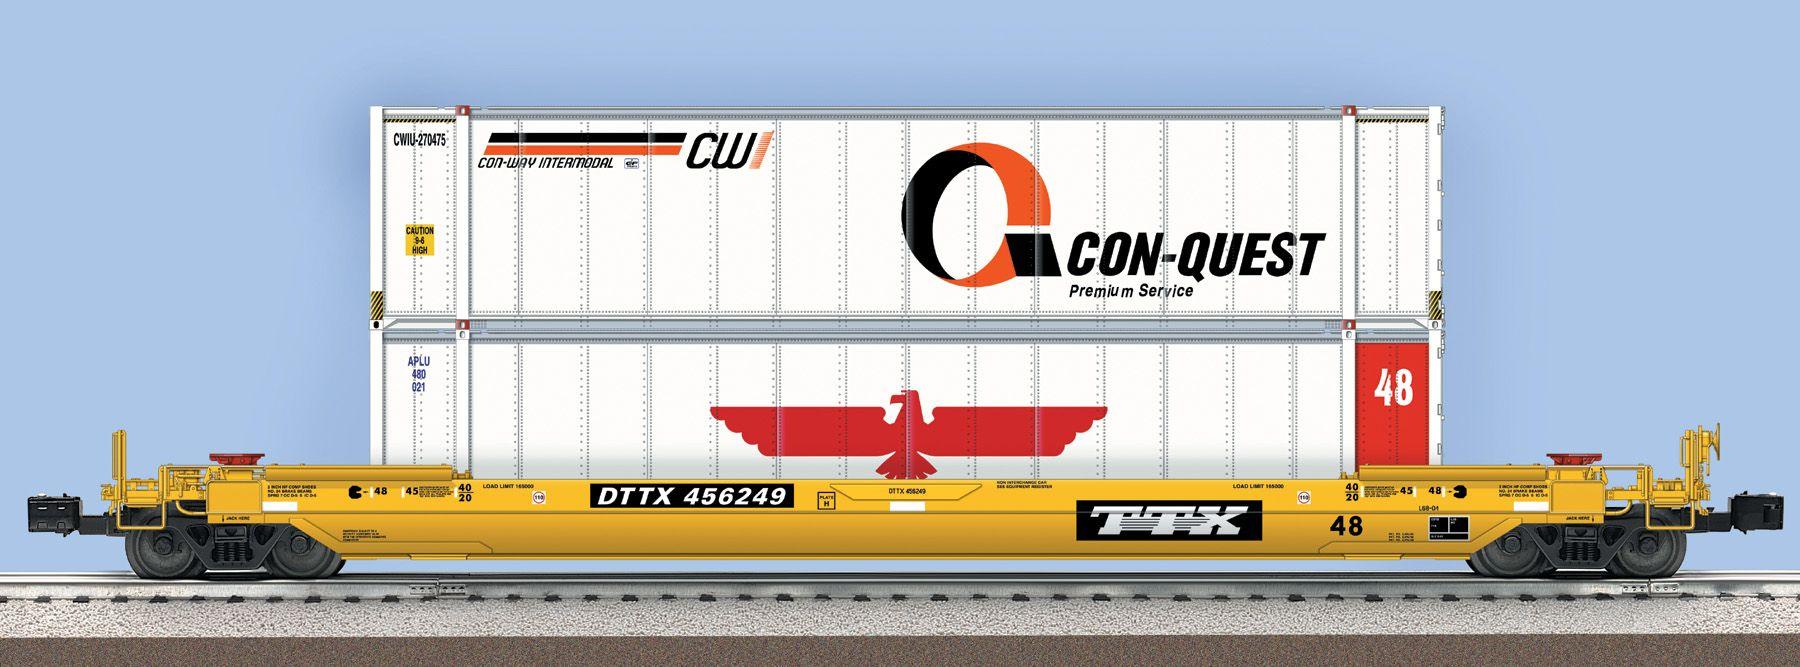 TTX Railcar Logo - Freight Car Friday